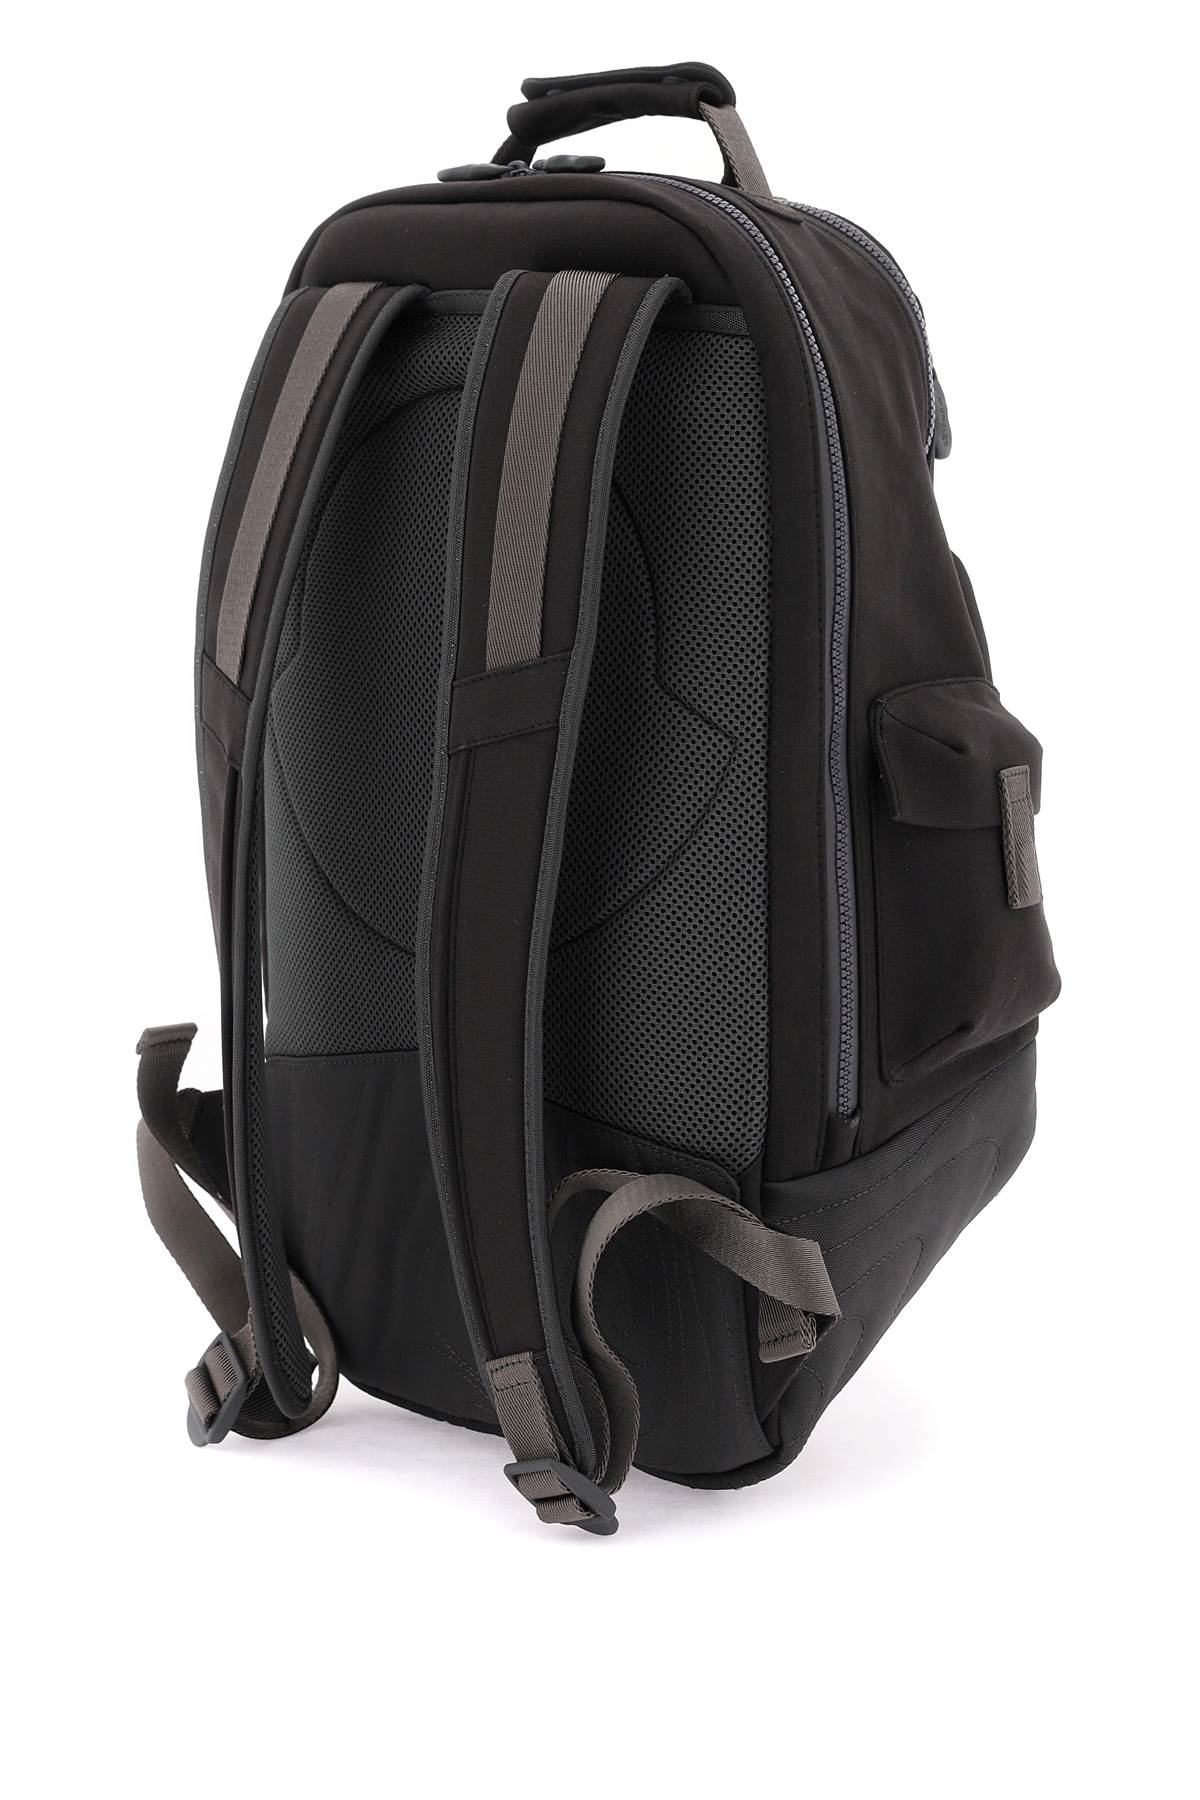 MONCLER GENIUS Stylish Black Canvas Backpack for Men - FW24